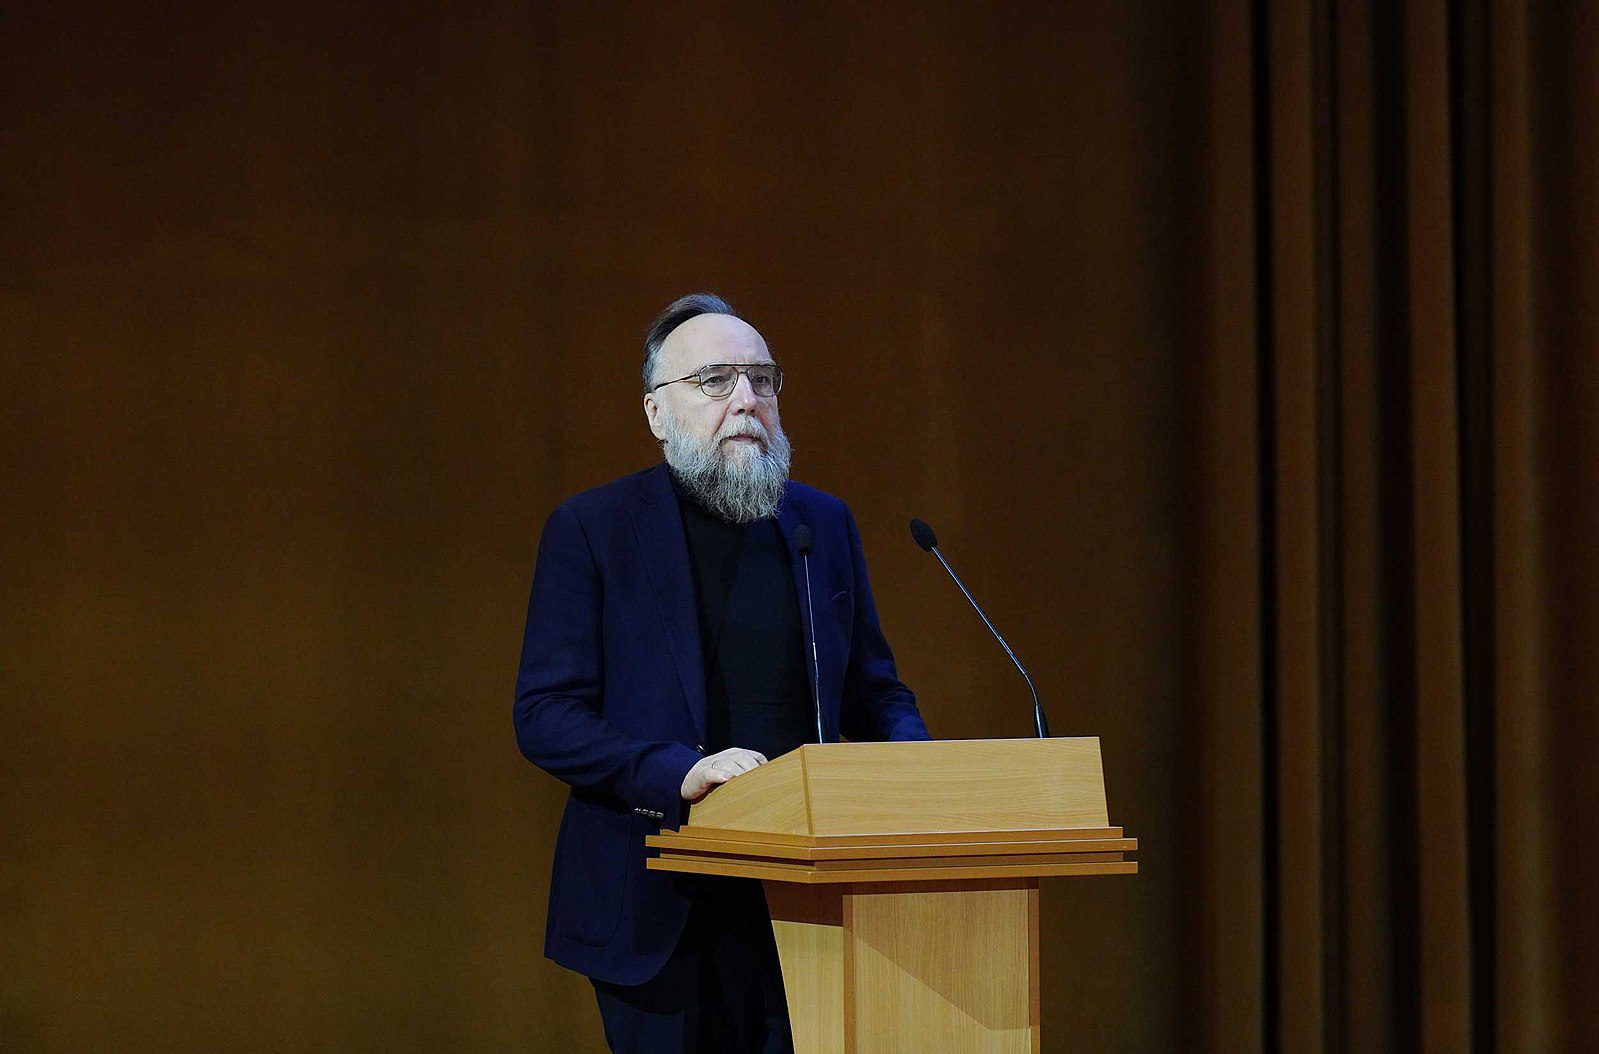 Alexander Dugin: Philosopher or Ideologue?